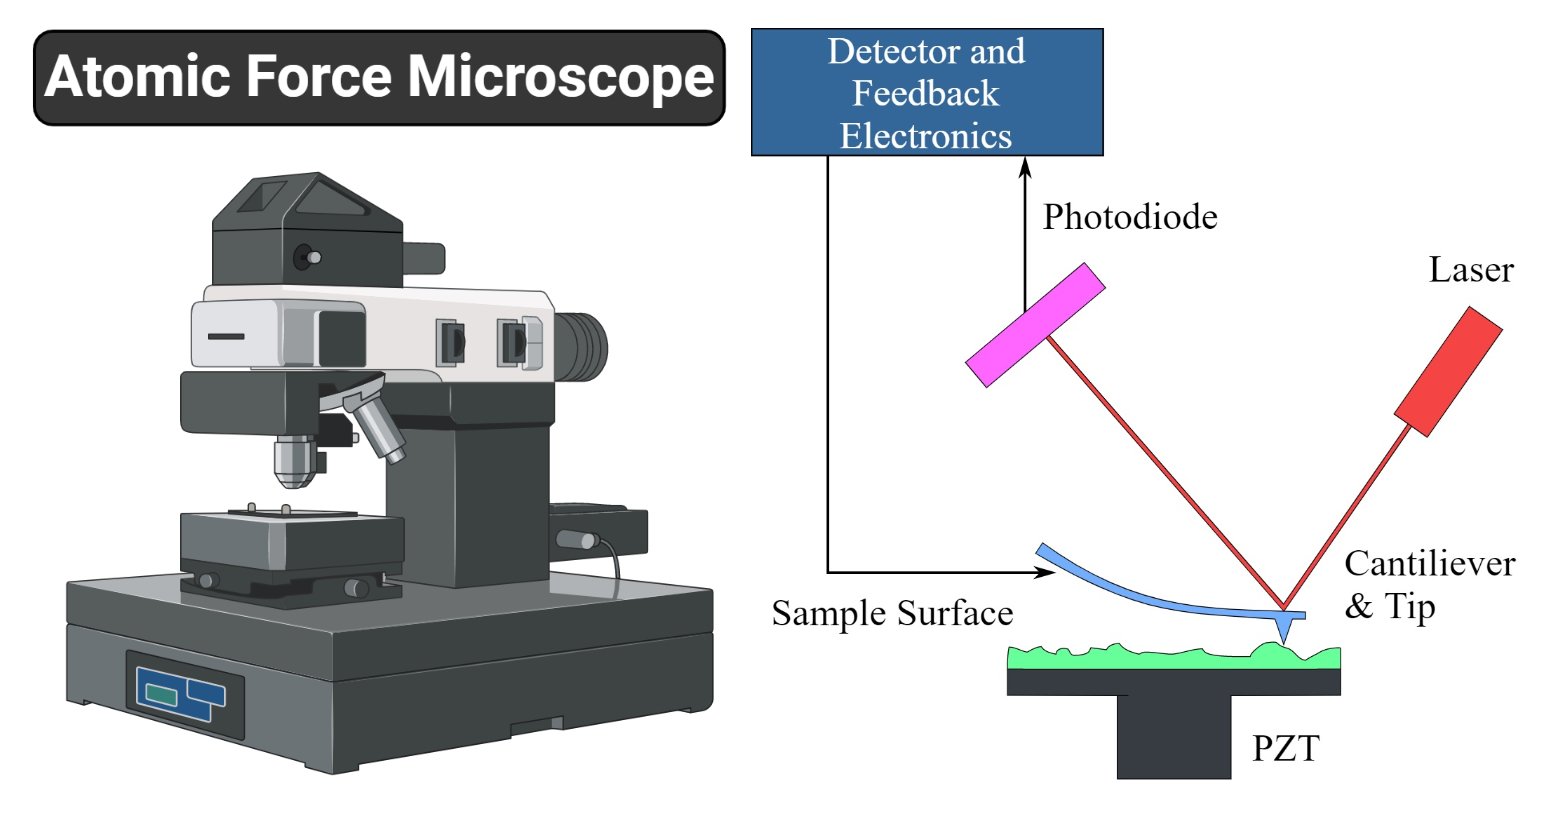 Atomic Force Microscope (AFM)